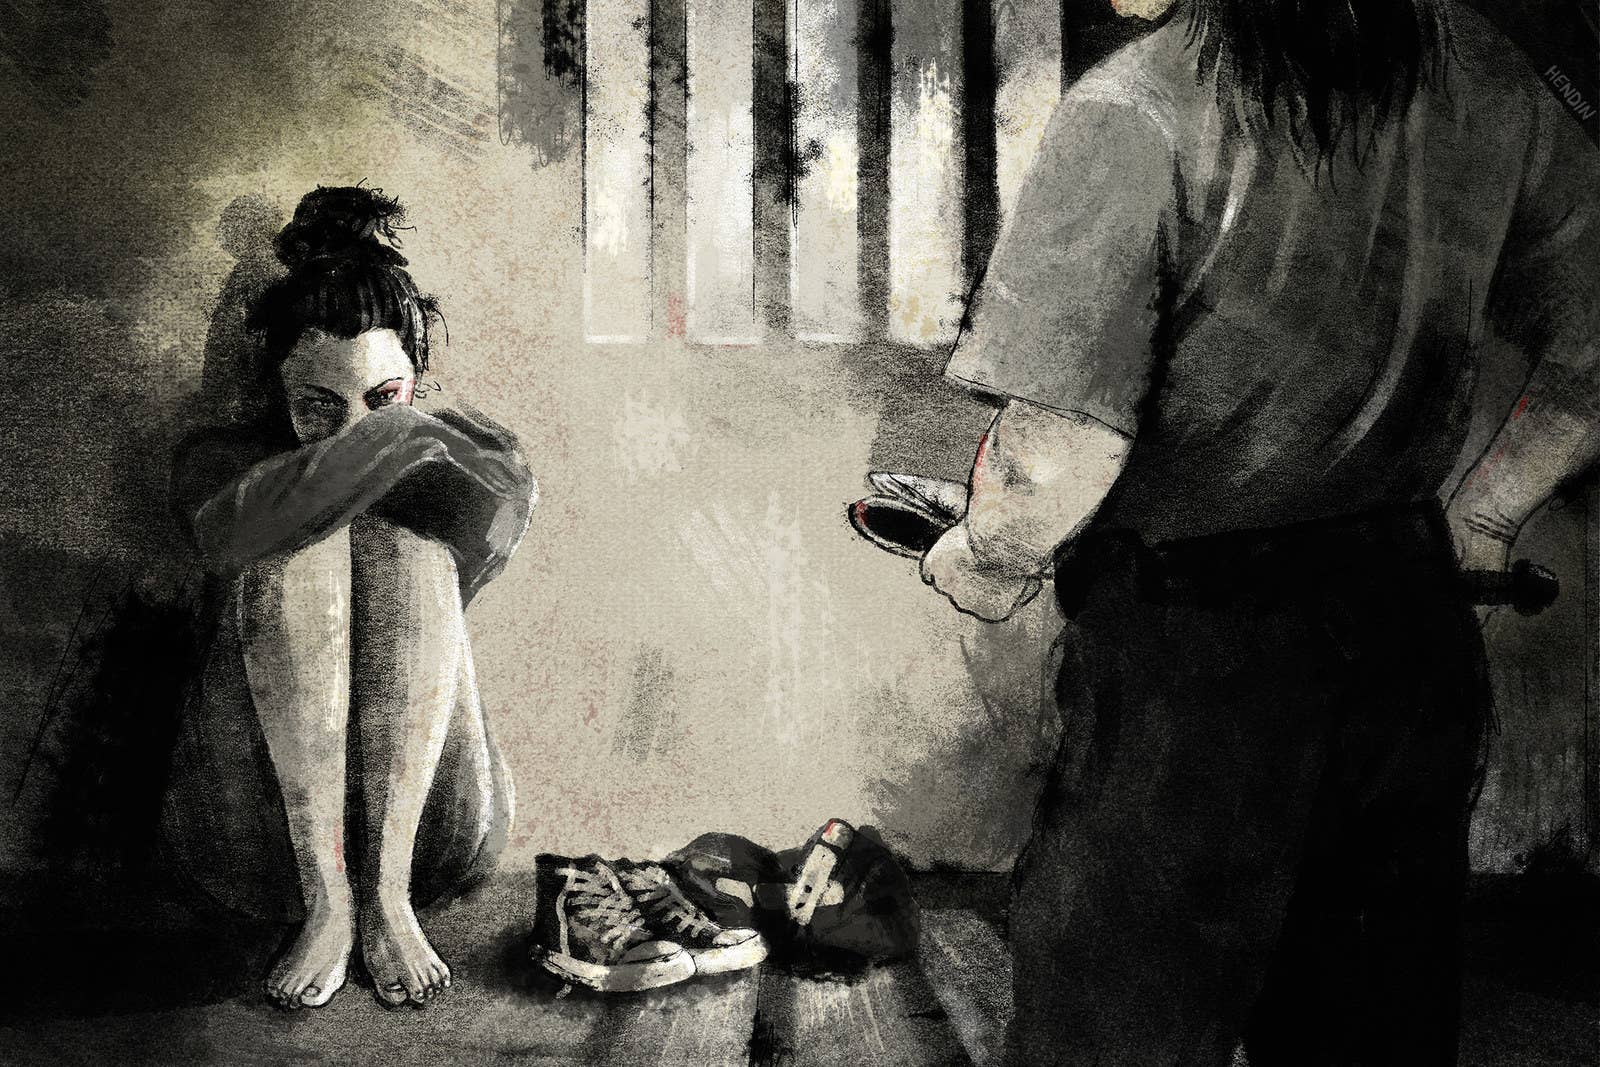 Female Prison Abuse Porn - These Vulnerable Women Were Illegally Strip-Searched In A Private Prison